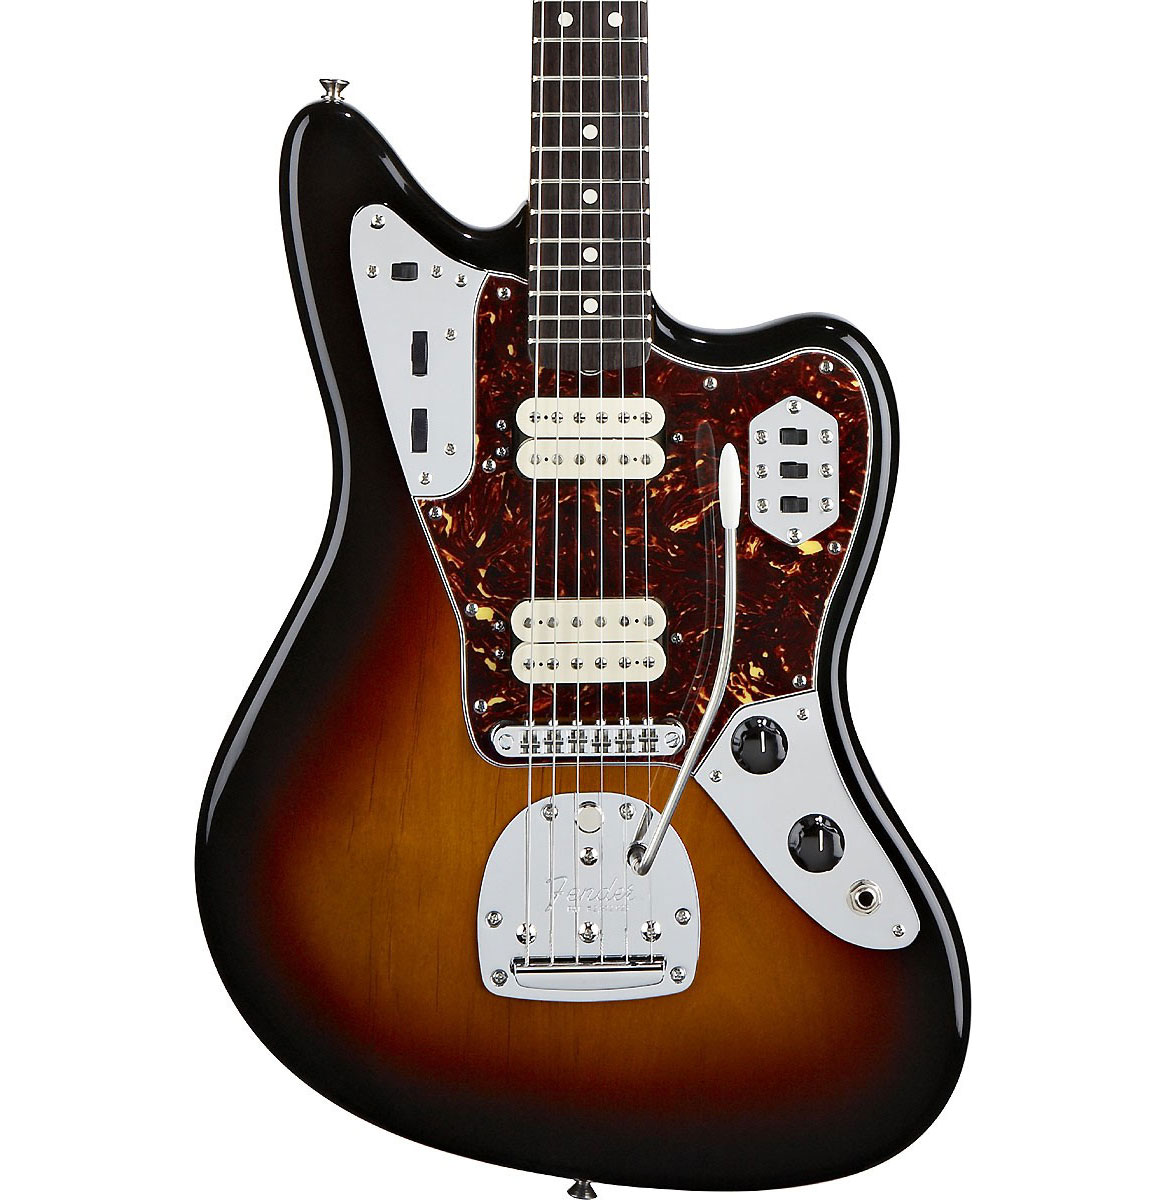 Fender Jaguar Hh Special Review